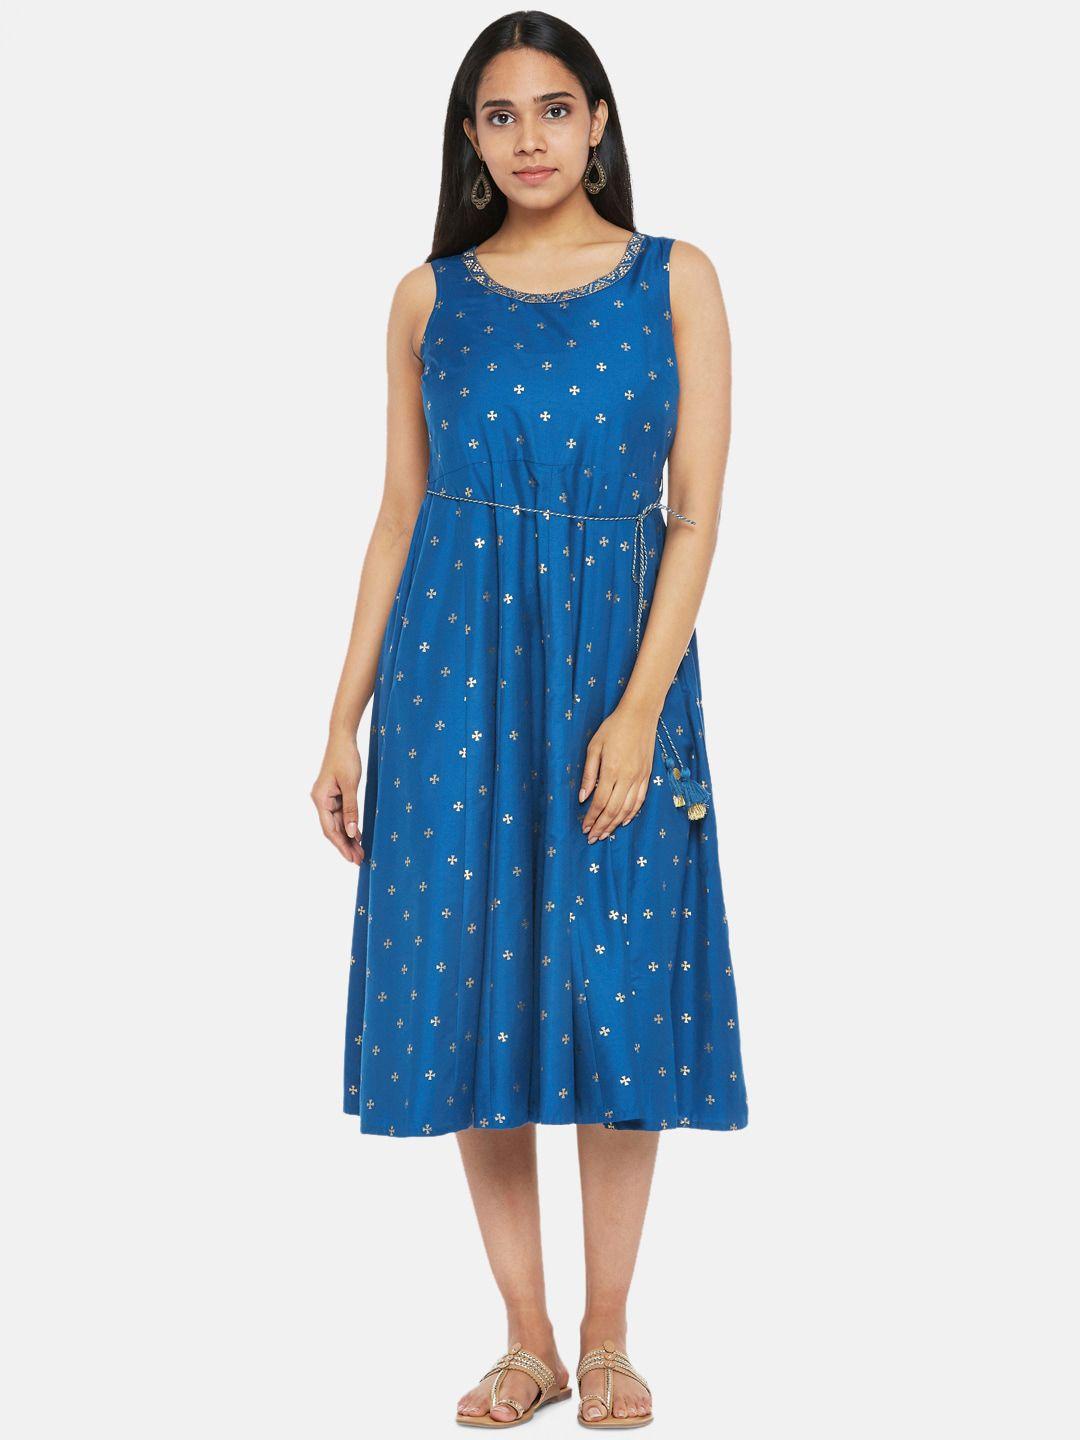 akkriti by pantaloons blue midi dress